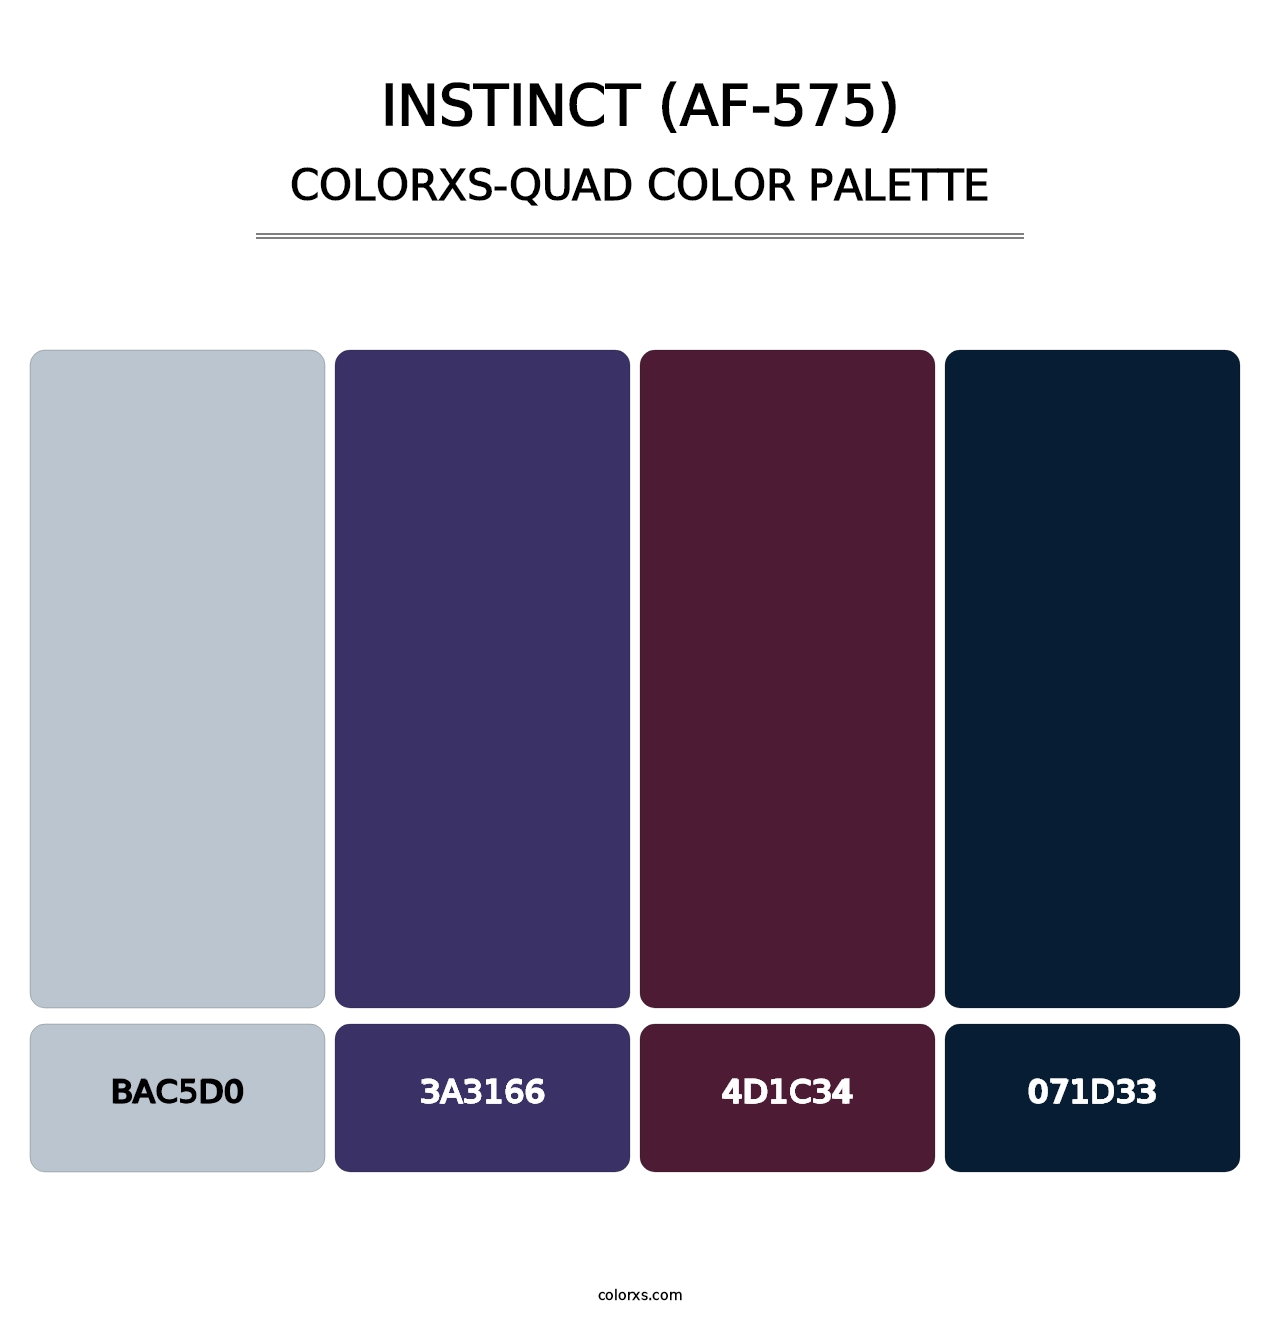 Instinct (AF-575) - Colorxs Quad Palette